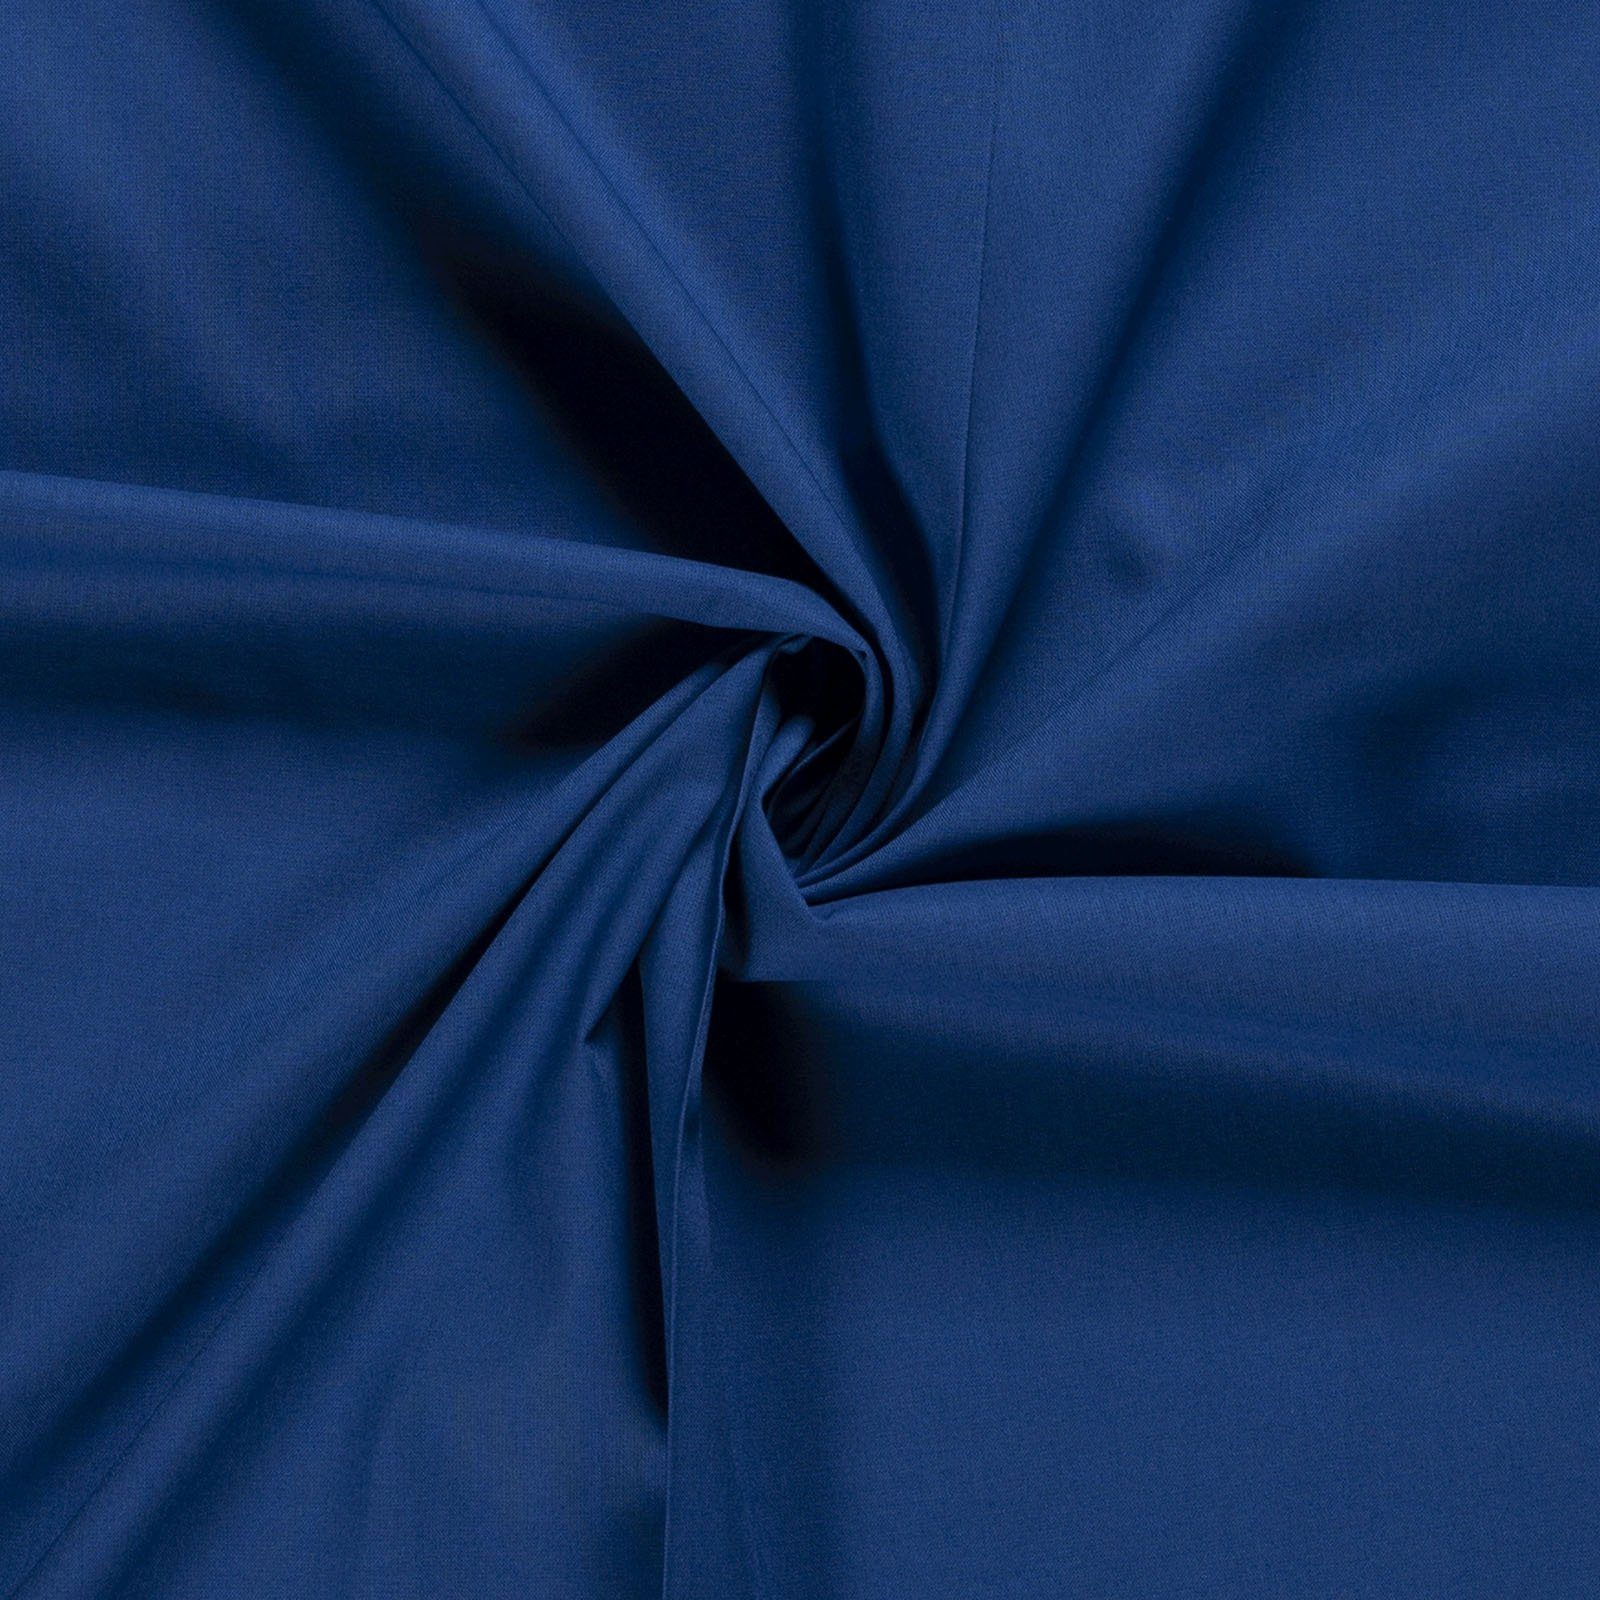 maDDma Stoff Popeline Baumwollstoff 50x140cm Meterware unifarben Basicstoff, blau